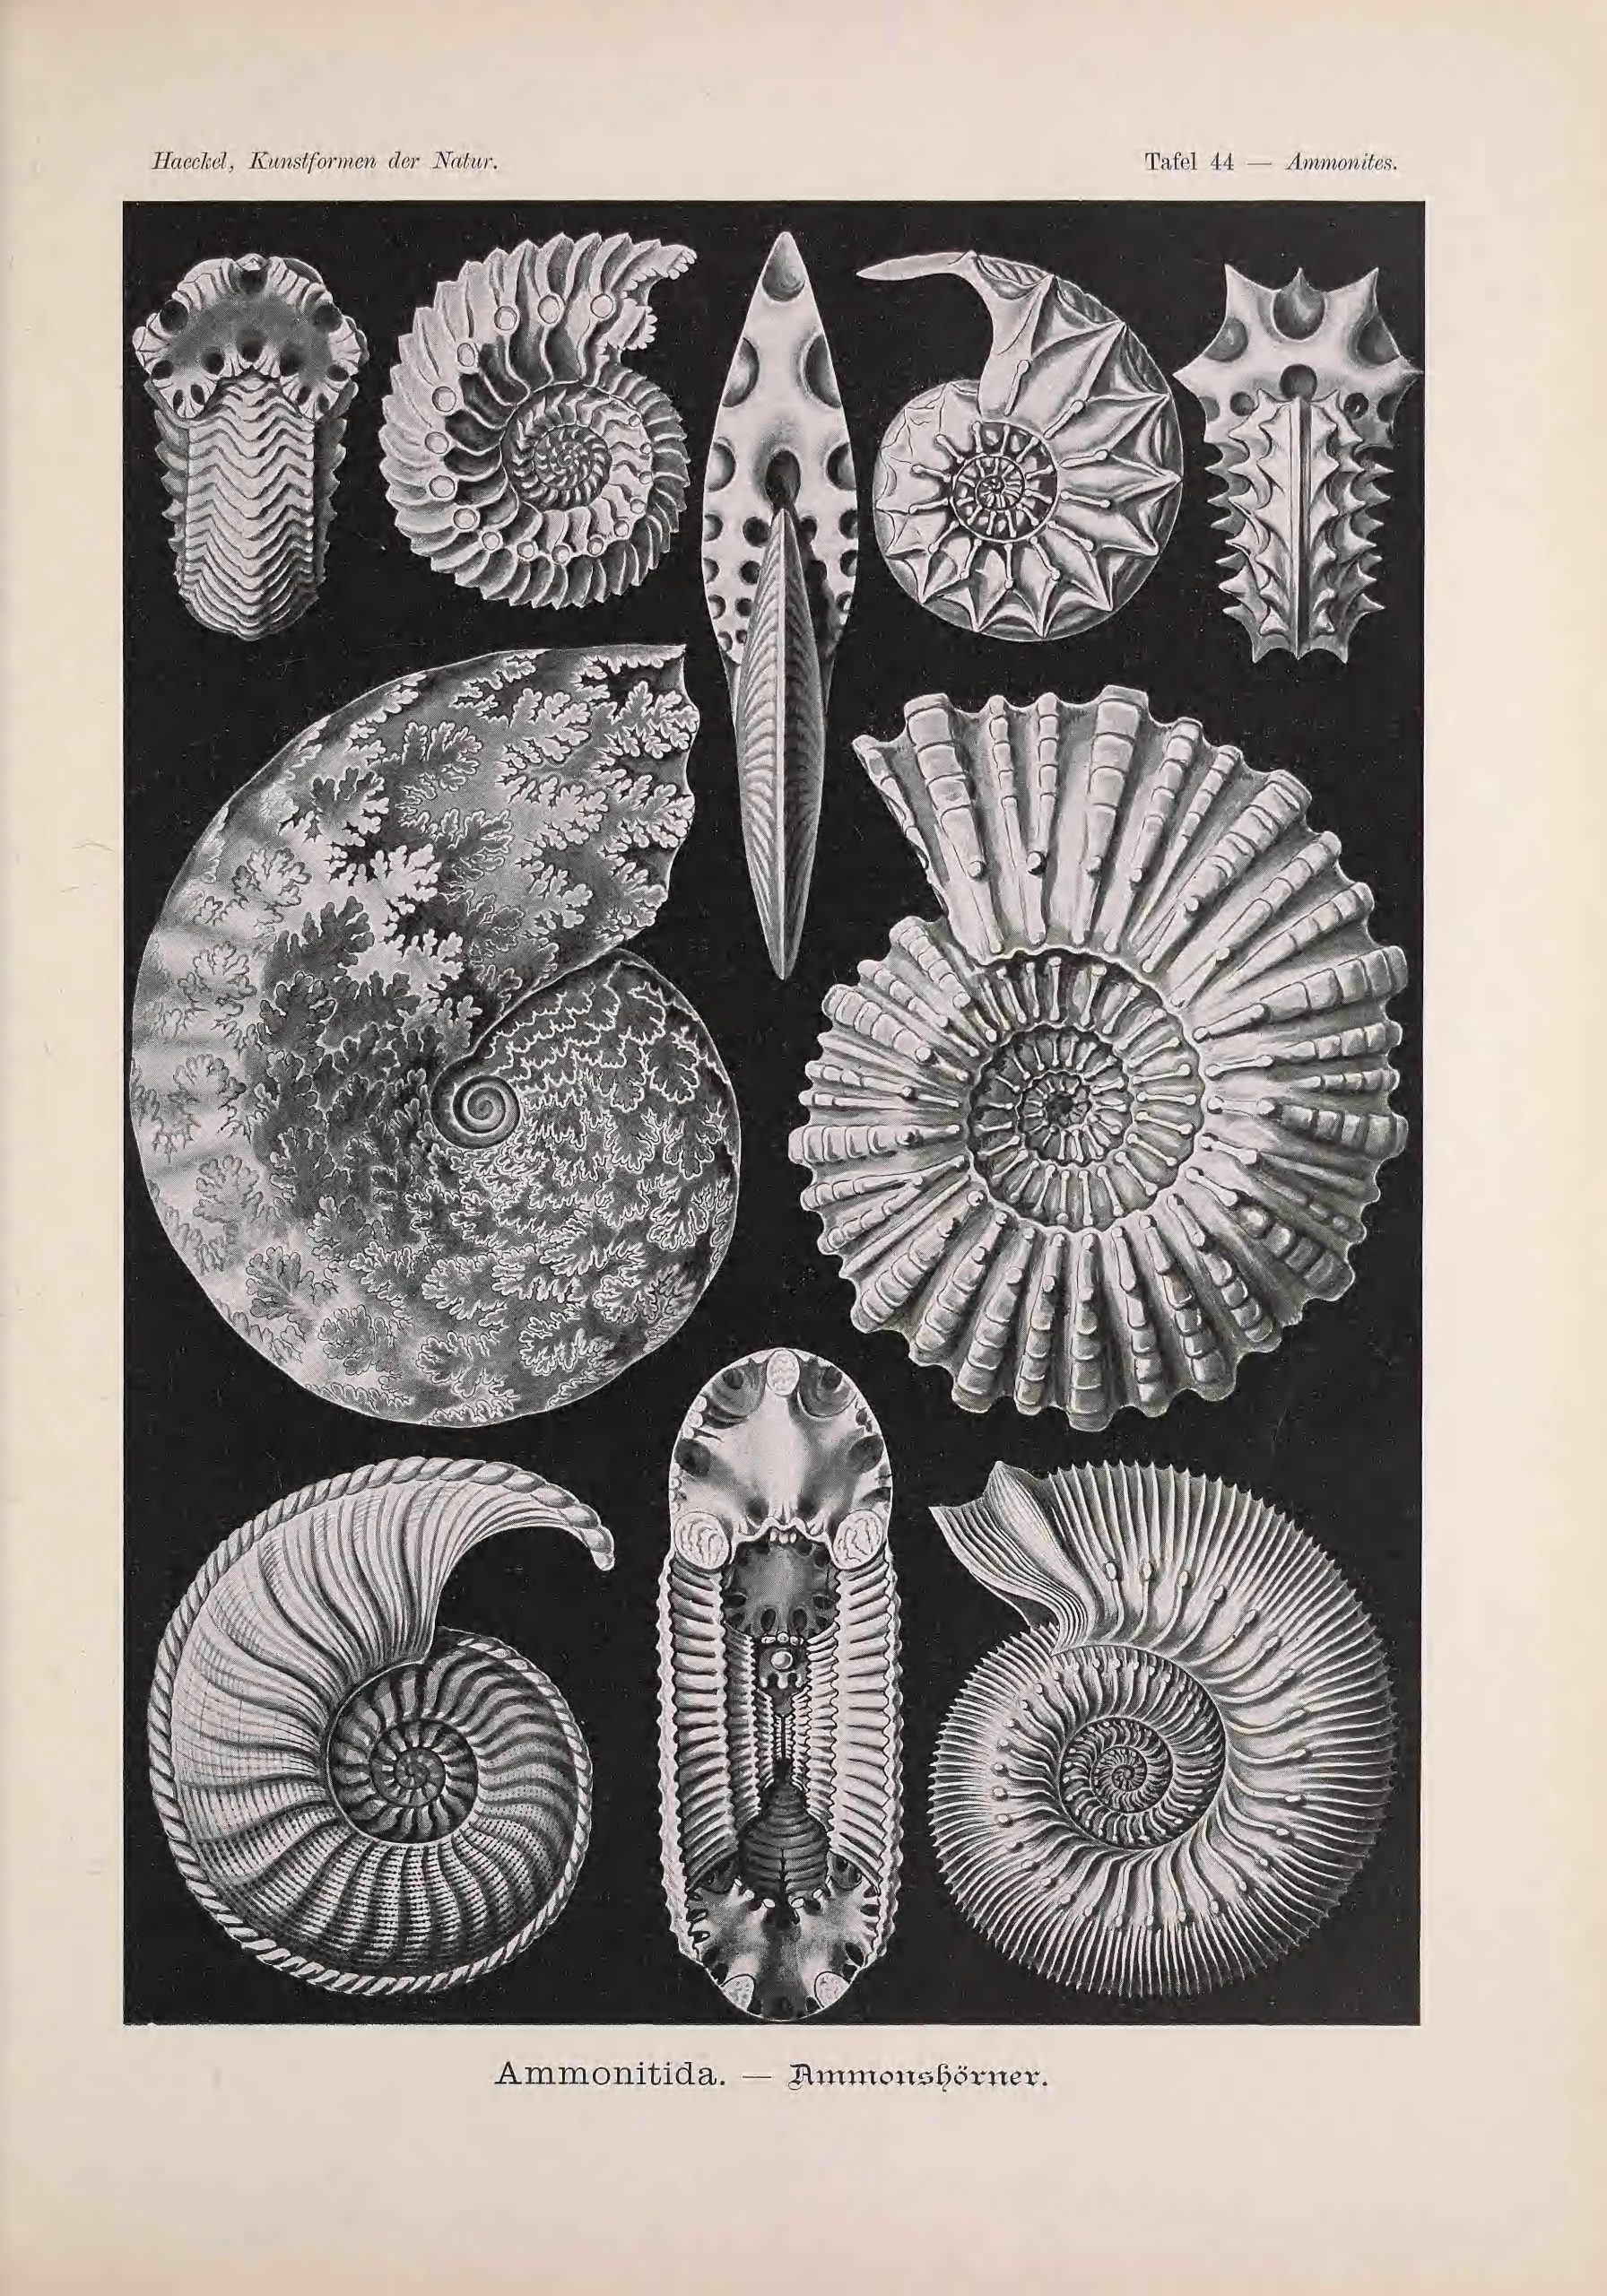 A scientific illustration of various ammonite fossils